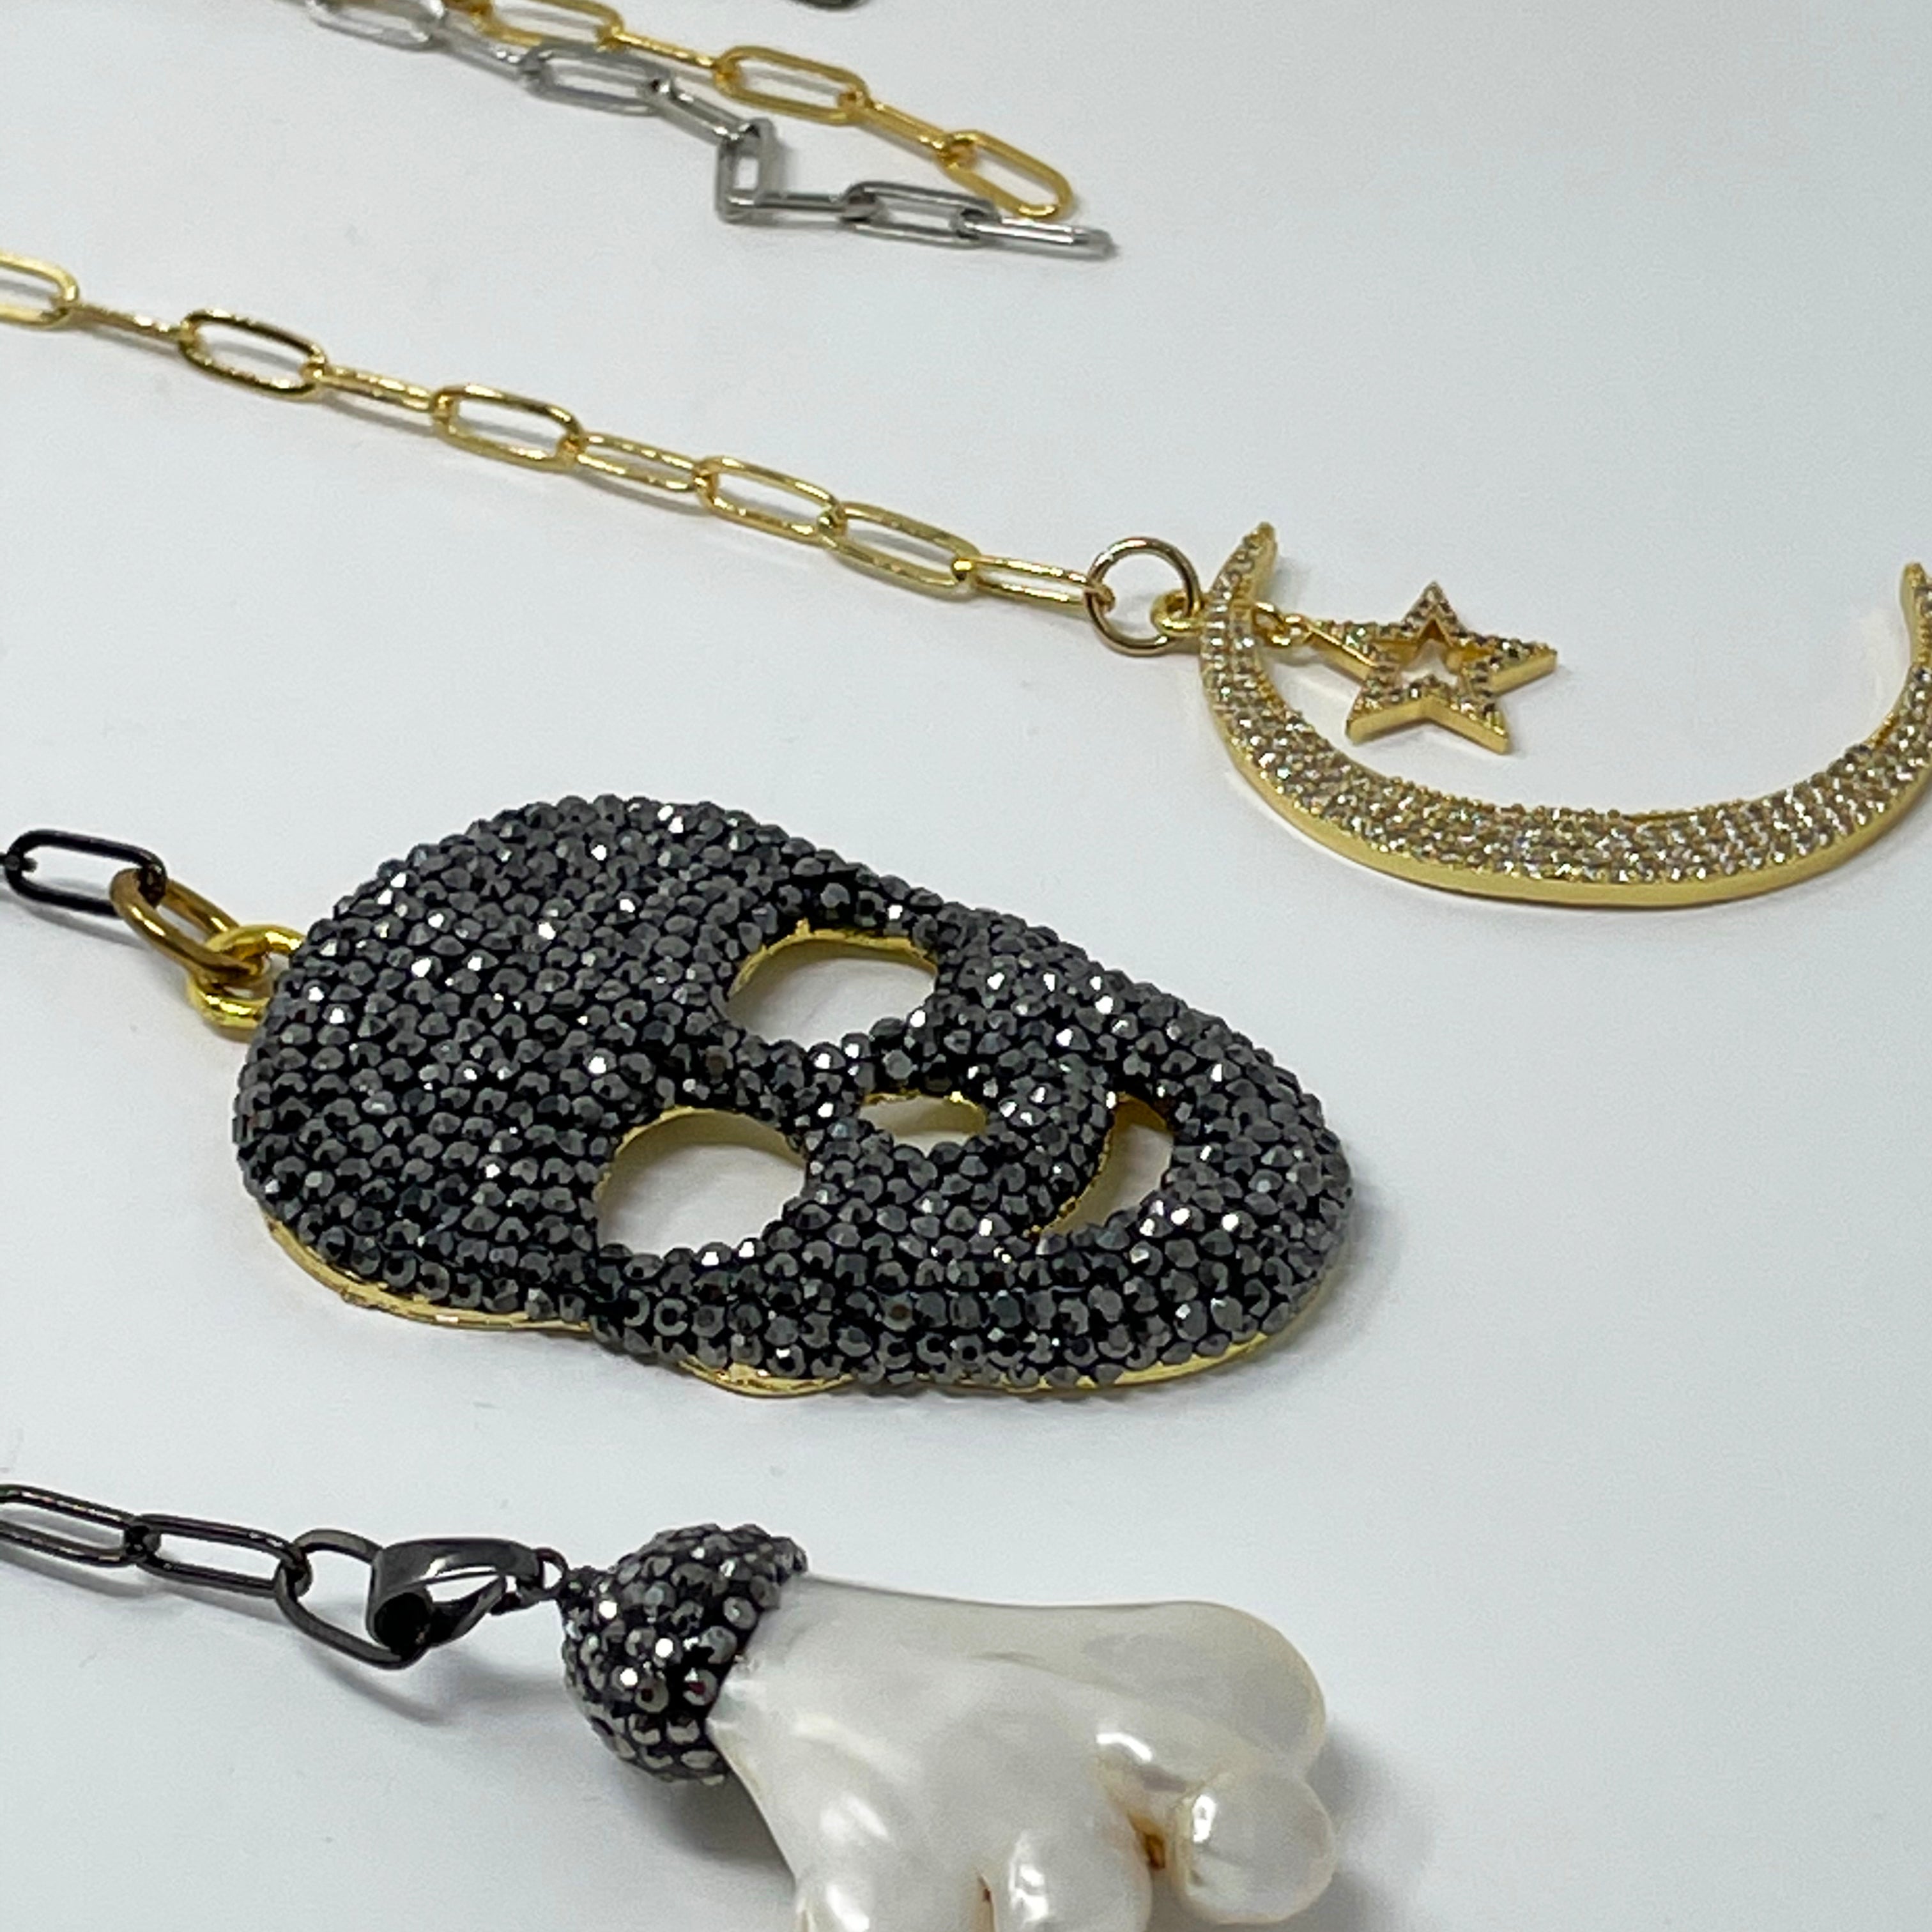 Clip Chain with Black Rhinestoned Skull Pendant - Custom Made